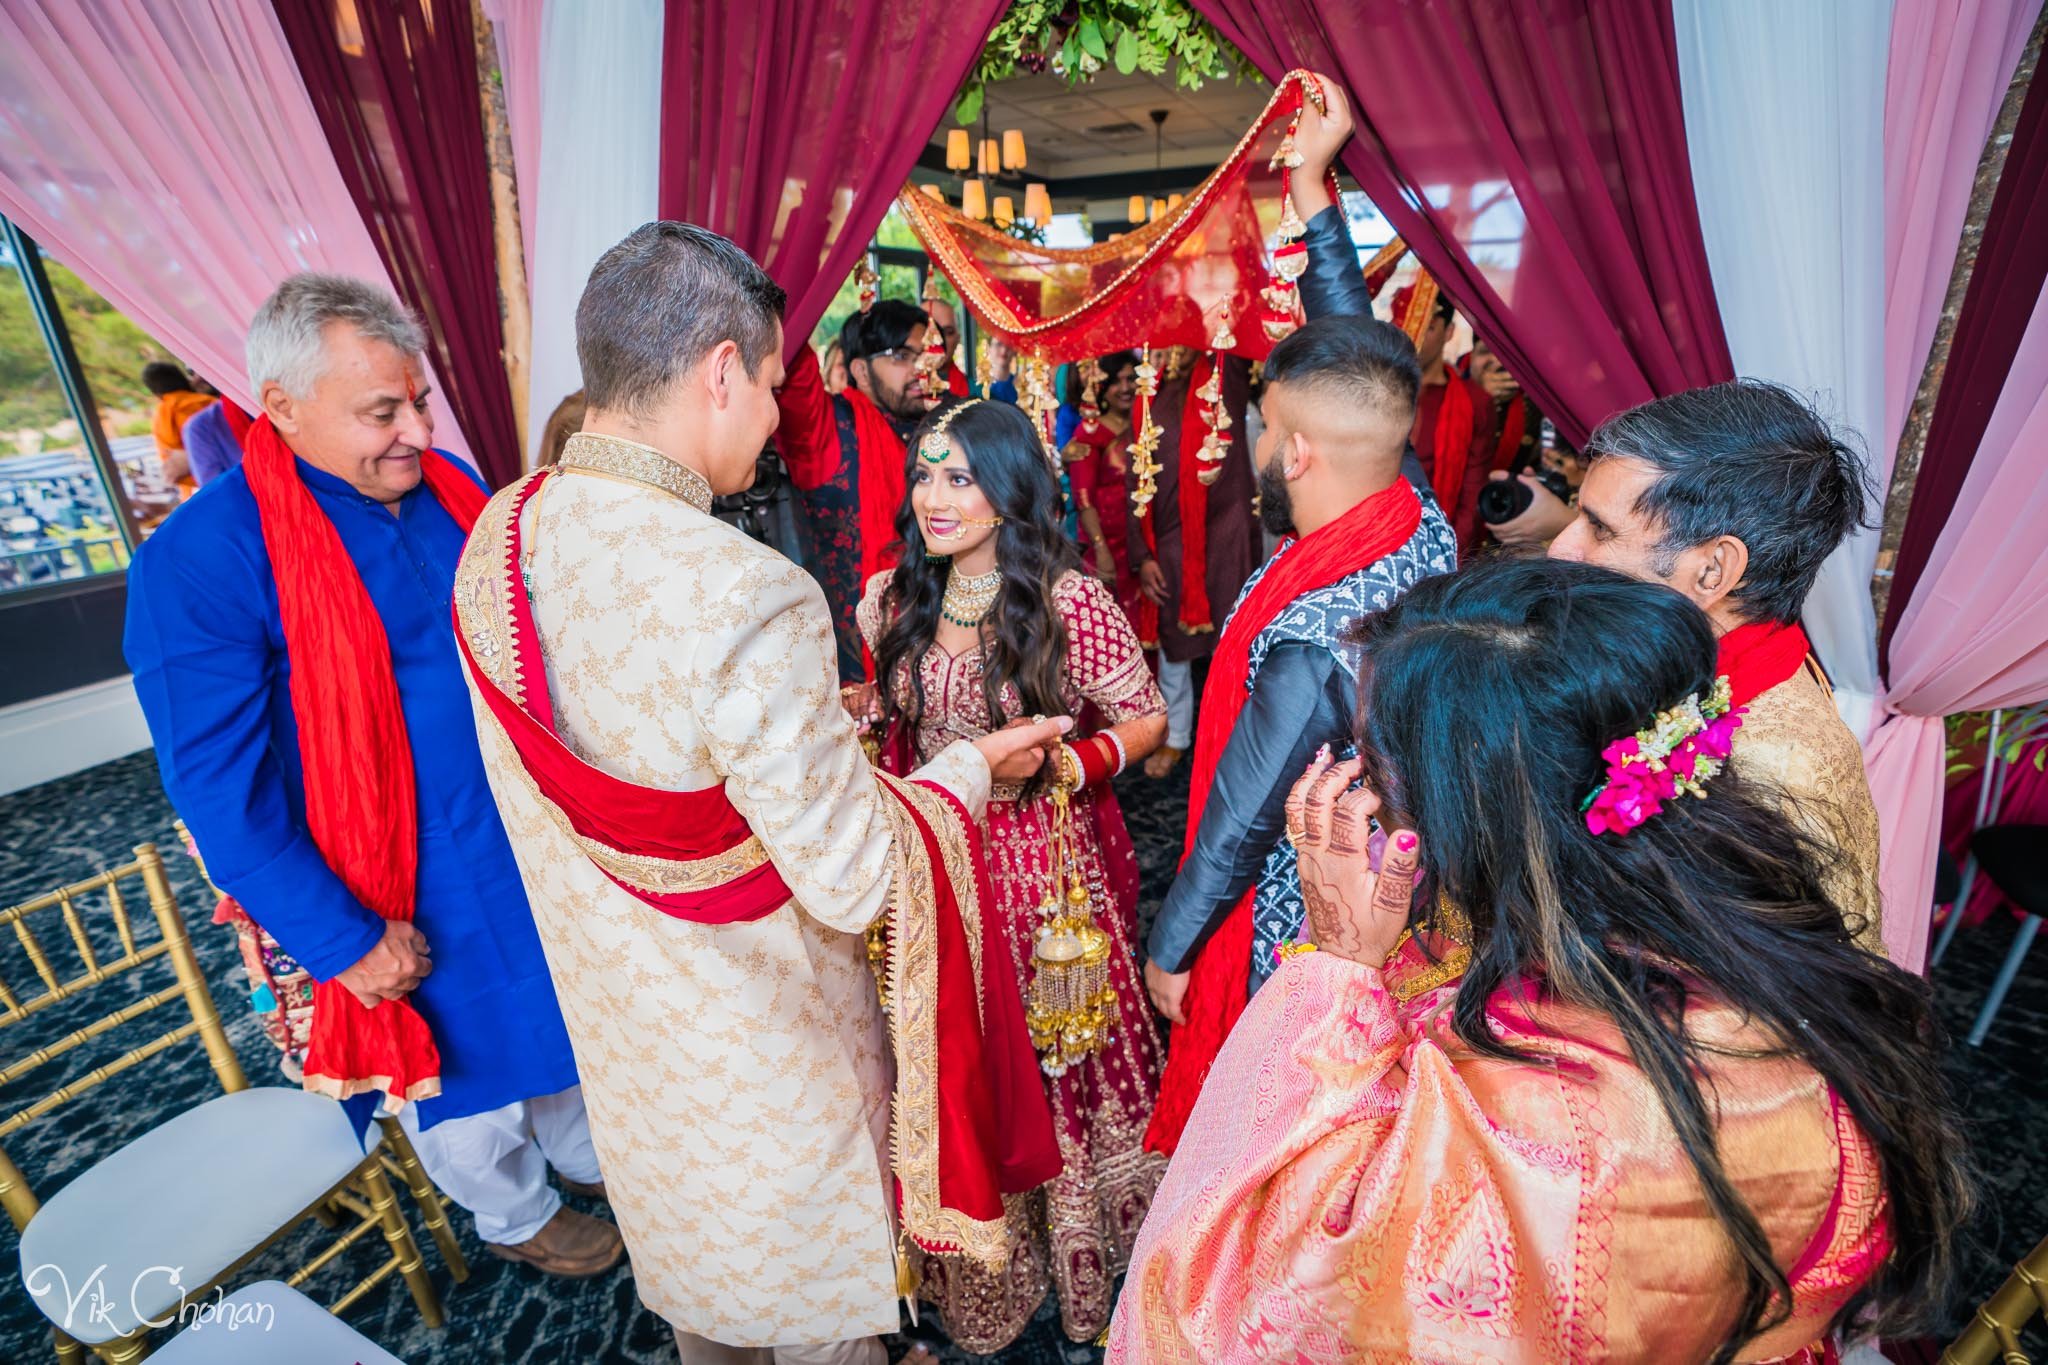 2022-06-09-Annie-&-Steven-Las-Vegas-Indian-Wedding-Ceremony-Photography-Vik-Chohan-Photography-Photo-Booth-Social-Media-VCP-098.jpg